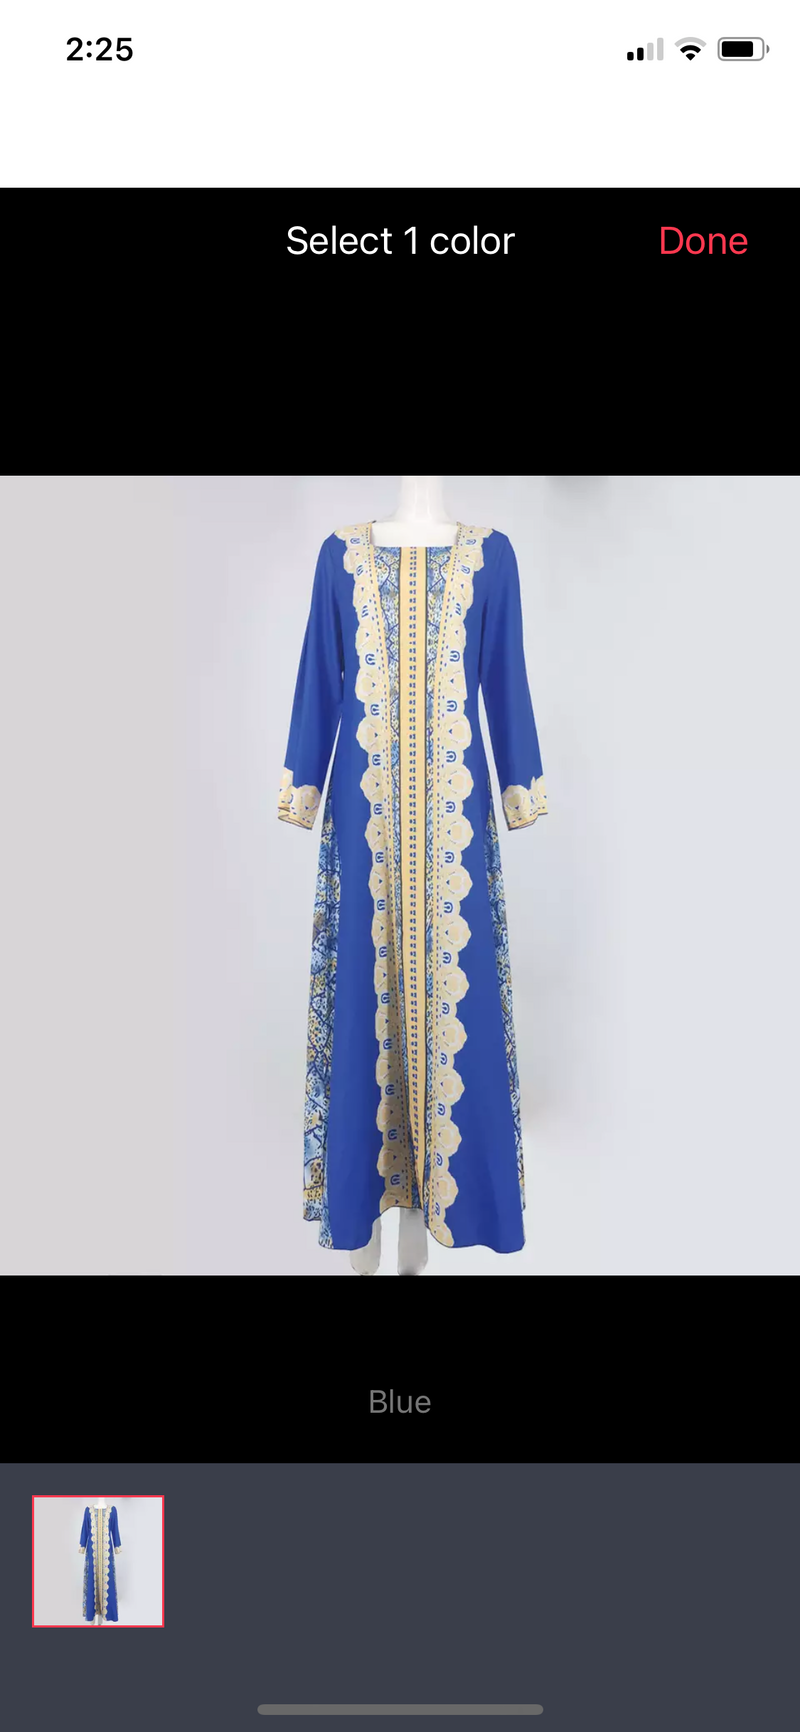 Moroccan Caftan Dubai Turkey Muslim Dress Women Blue Abaya Elegant Lady Islamic Clothing Jelaba Size XXL(S3695150 58) - Tuzzut.com Qatar Online Shopping